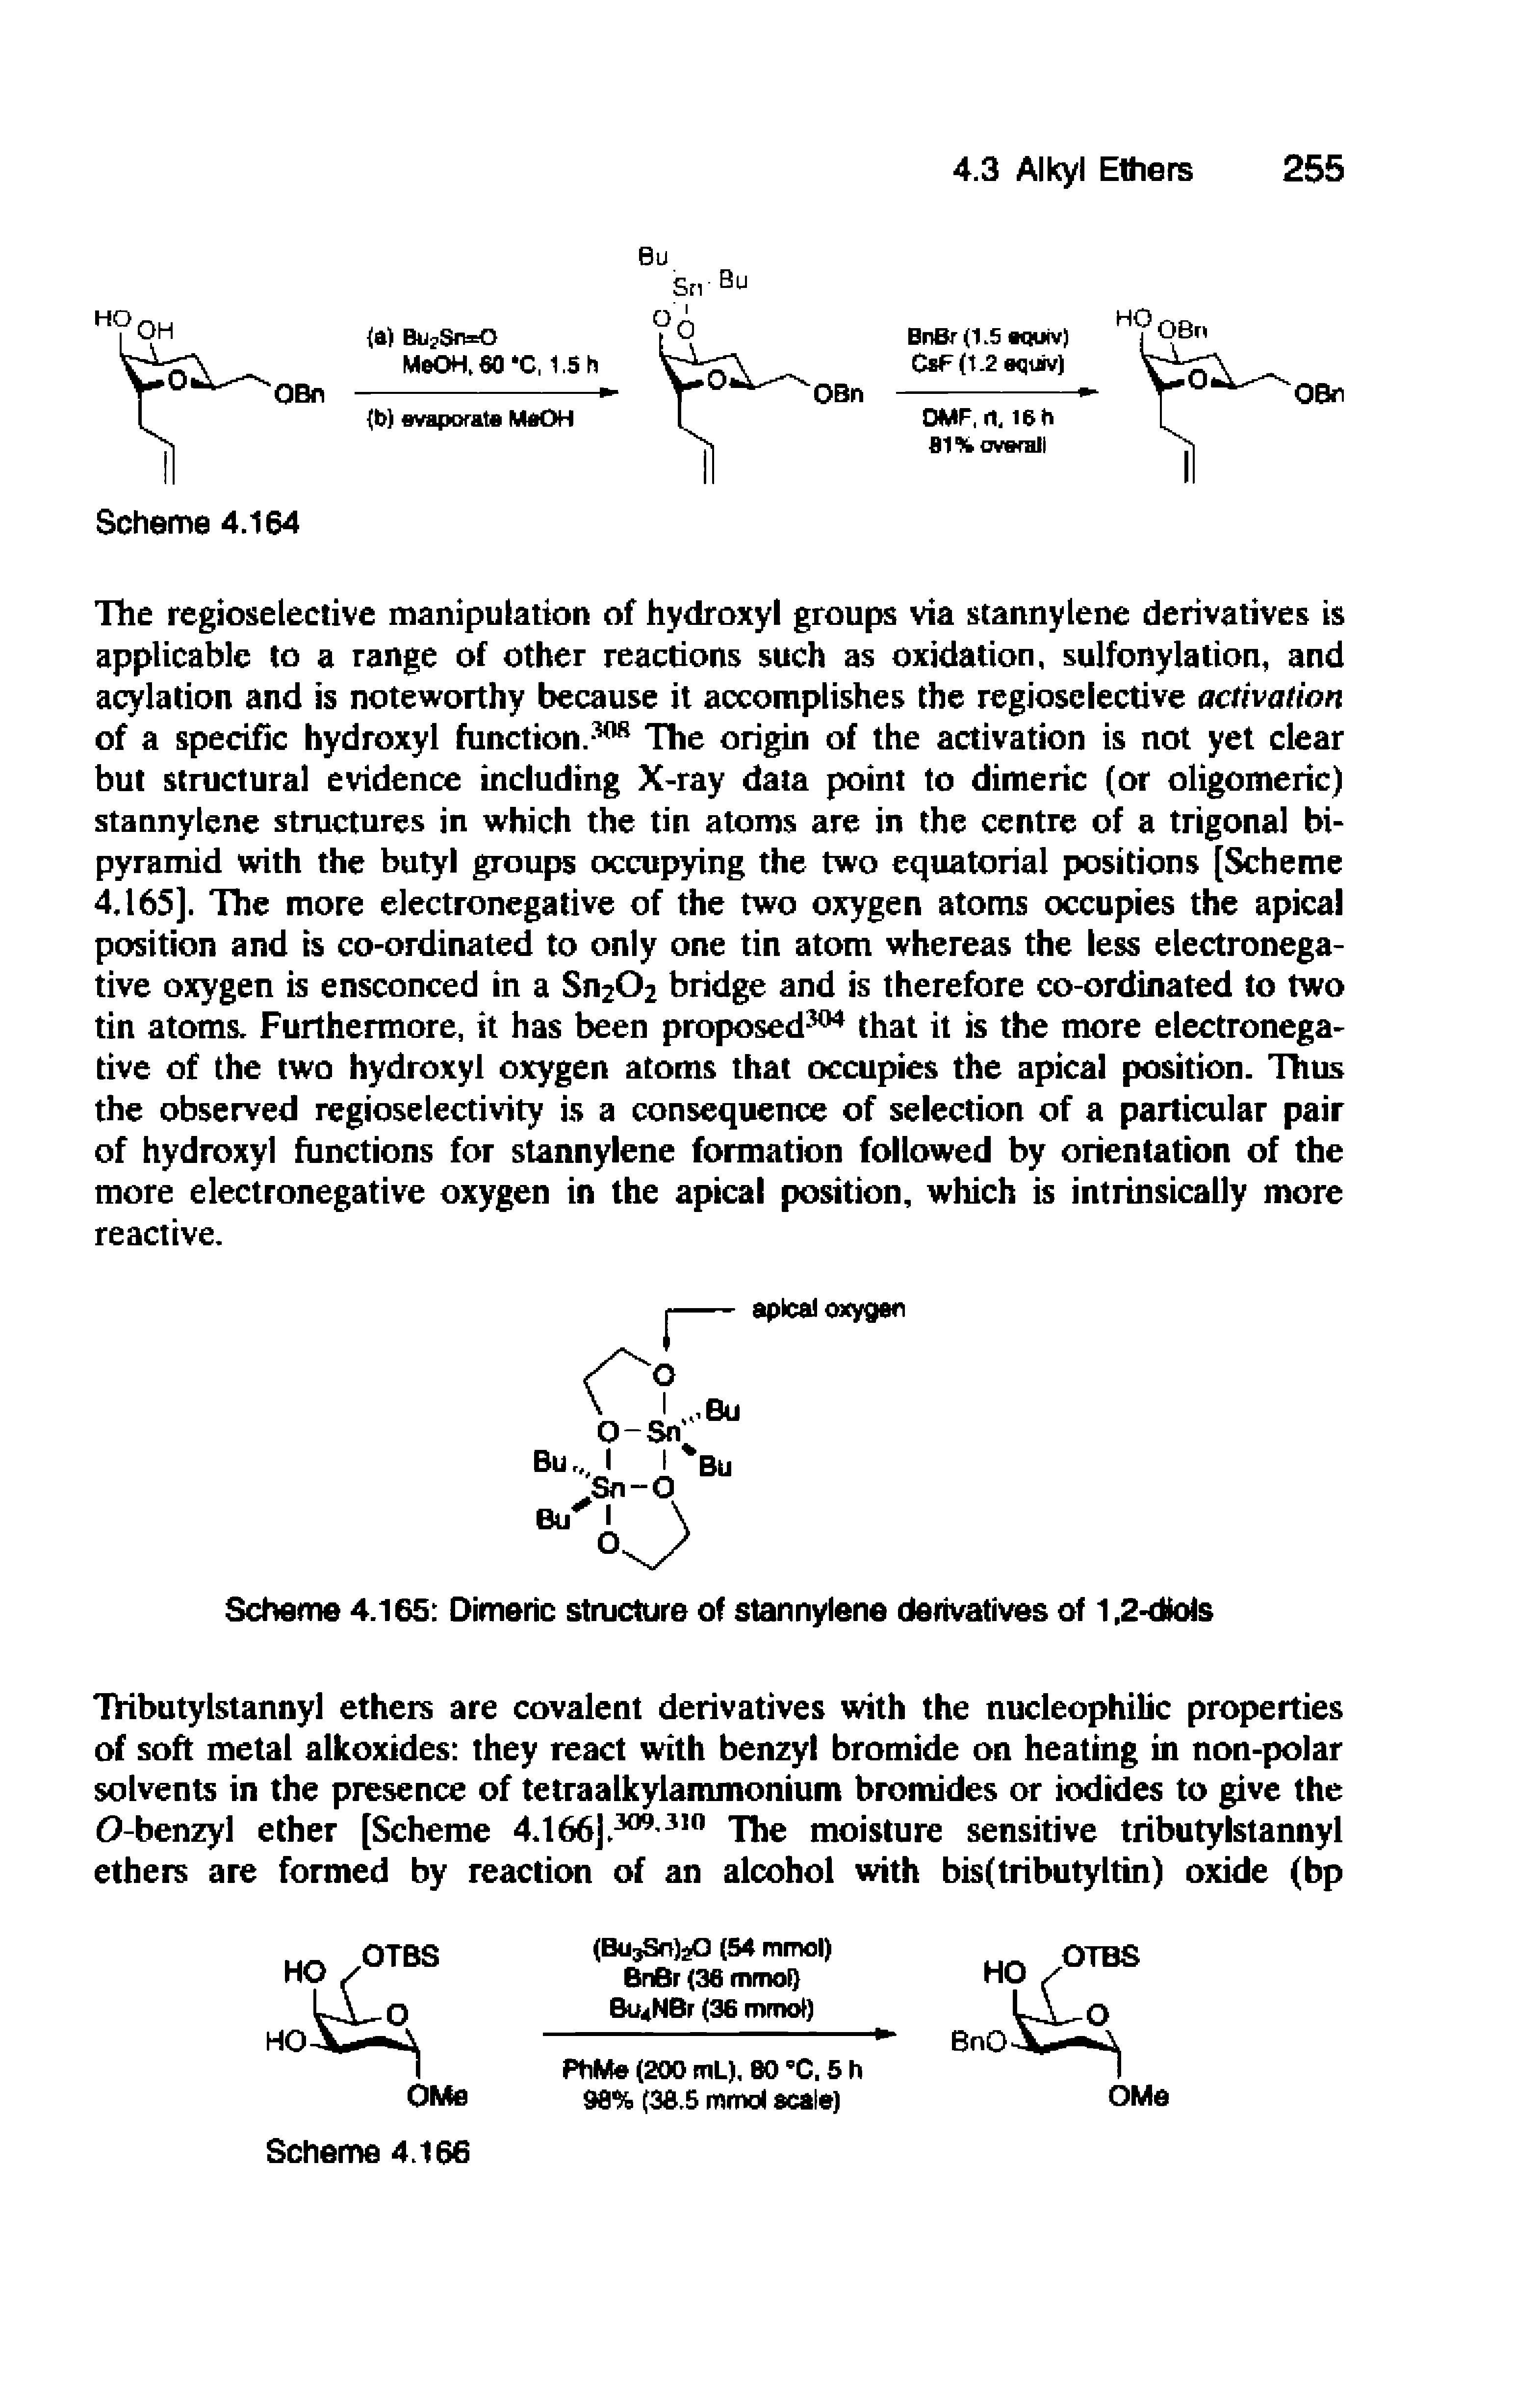 Scheme 4.165 Dimeric structure of stannylene derivatives of 1,2-dfols...